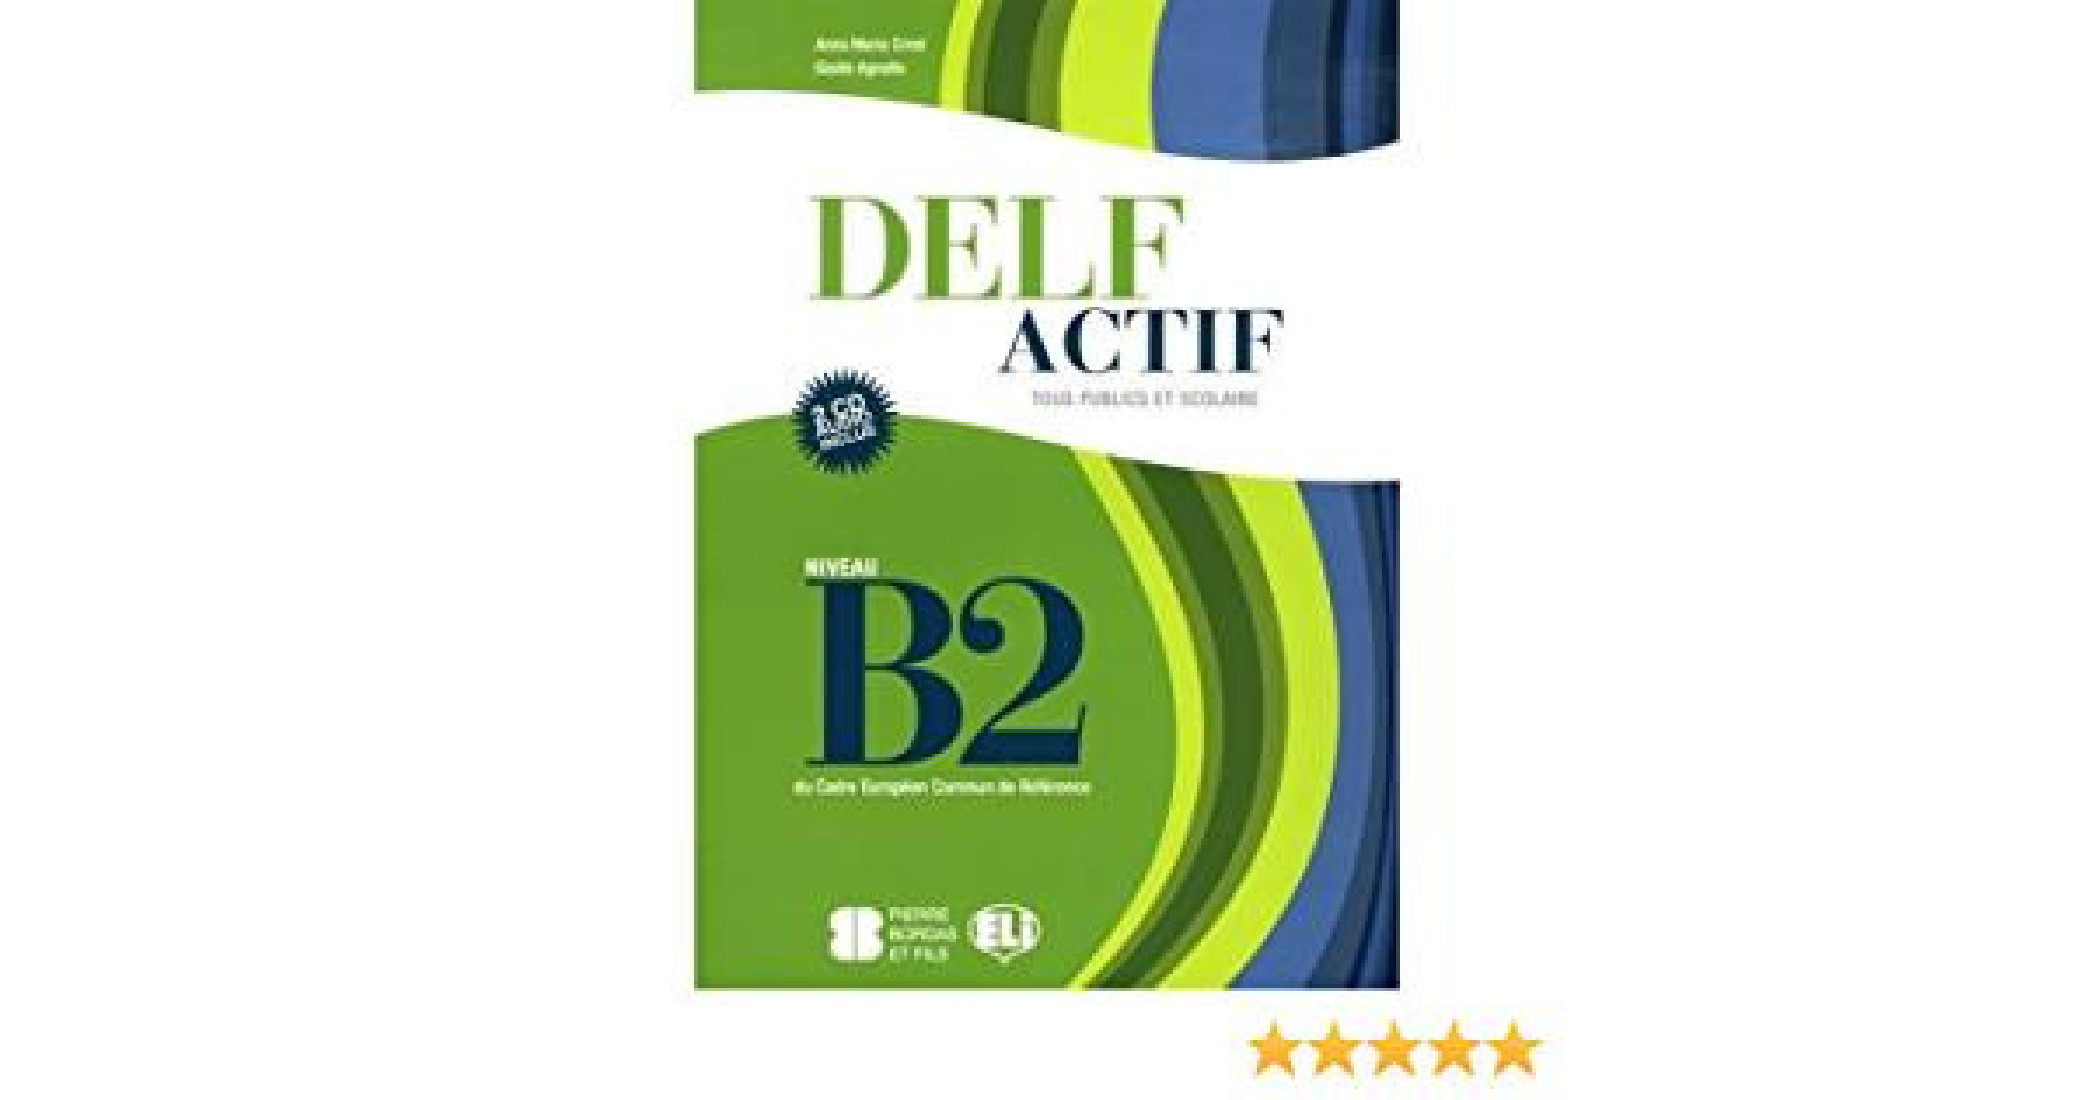 DELF ACTIF B2 JUNIOR SCHOLAIRE (+ 2 CD)